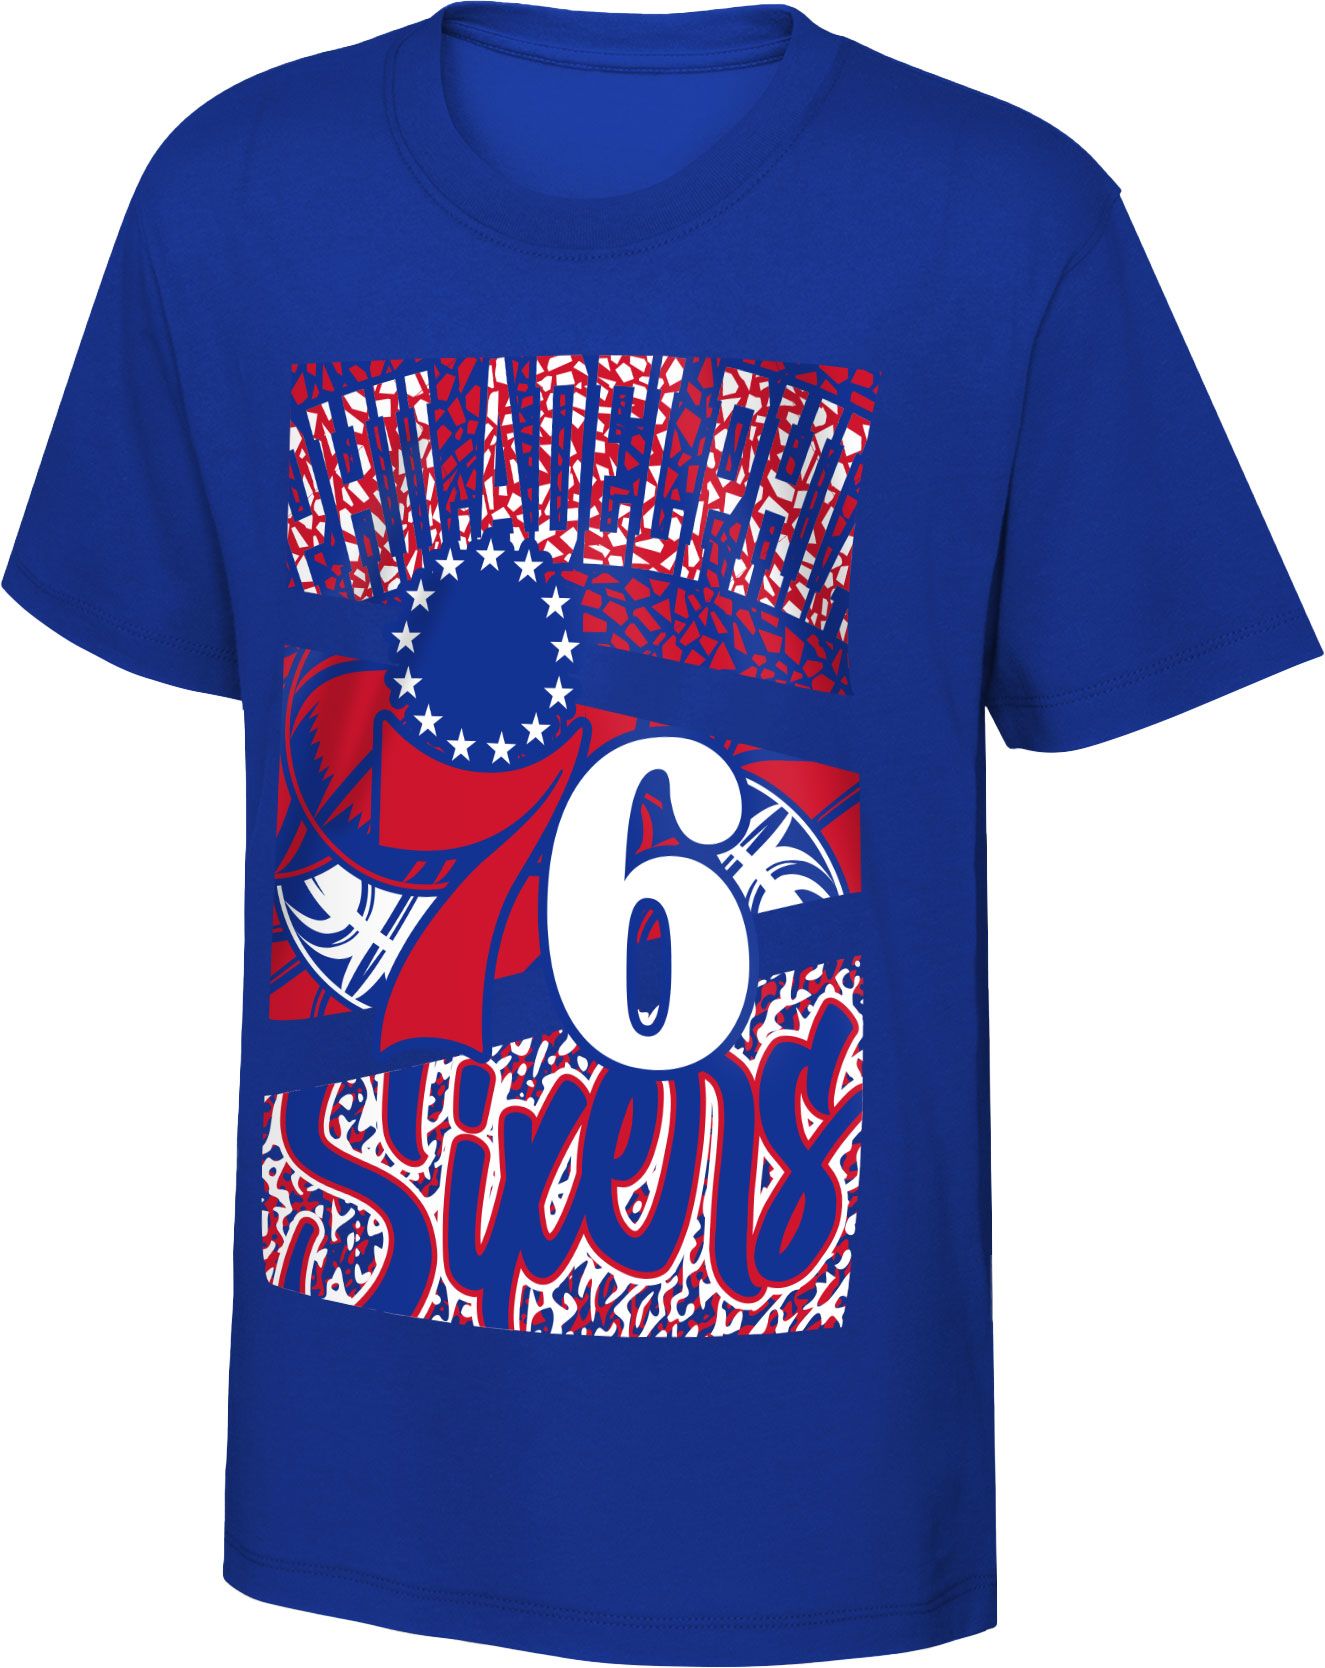 Outerstuff Youth Philadelphia 76ers Blue Court Culture T-Shirt